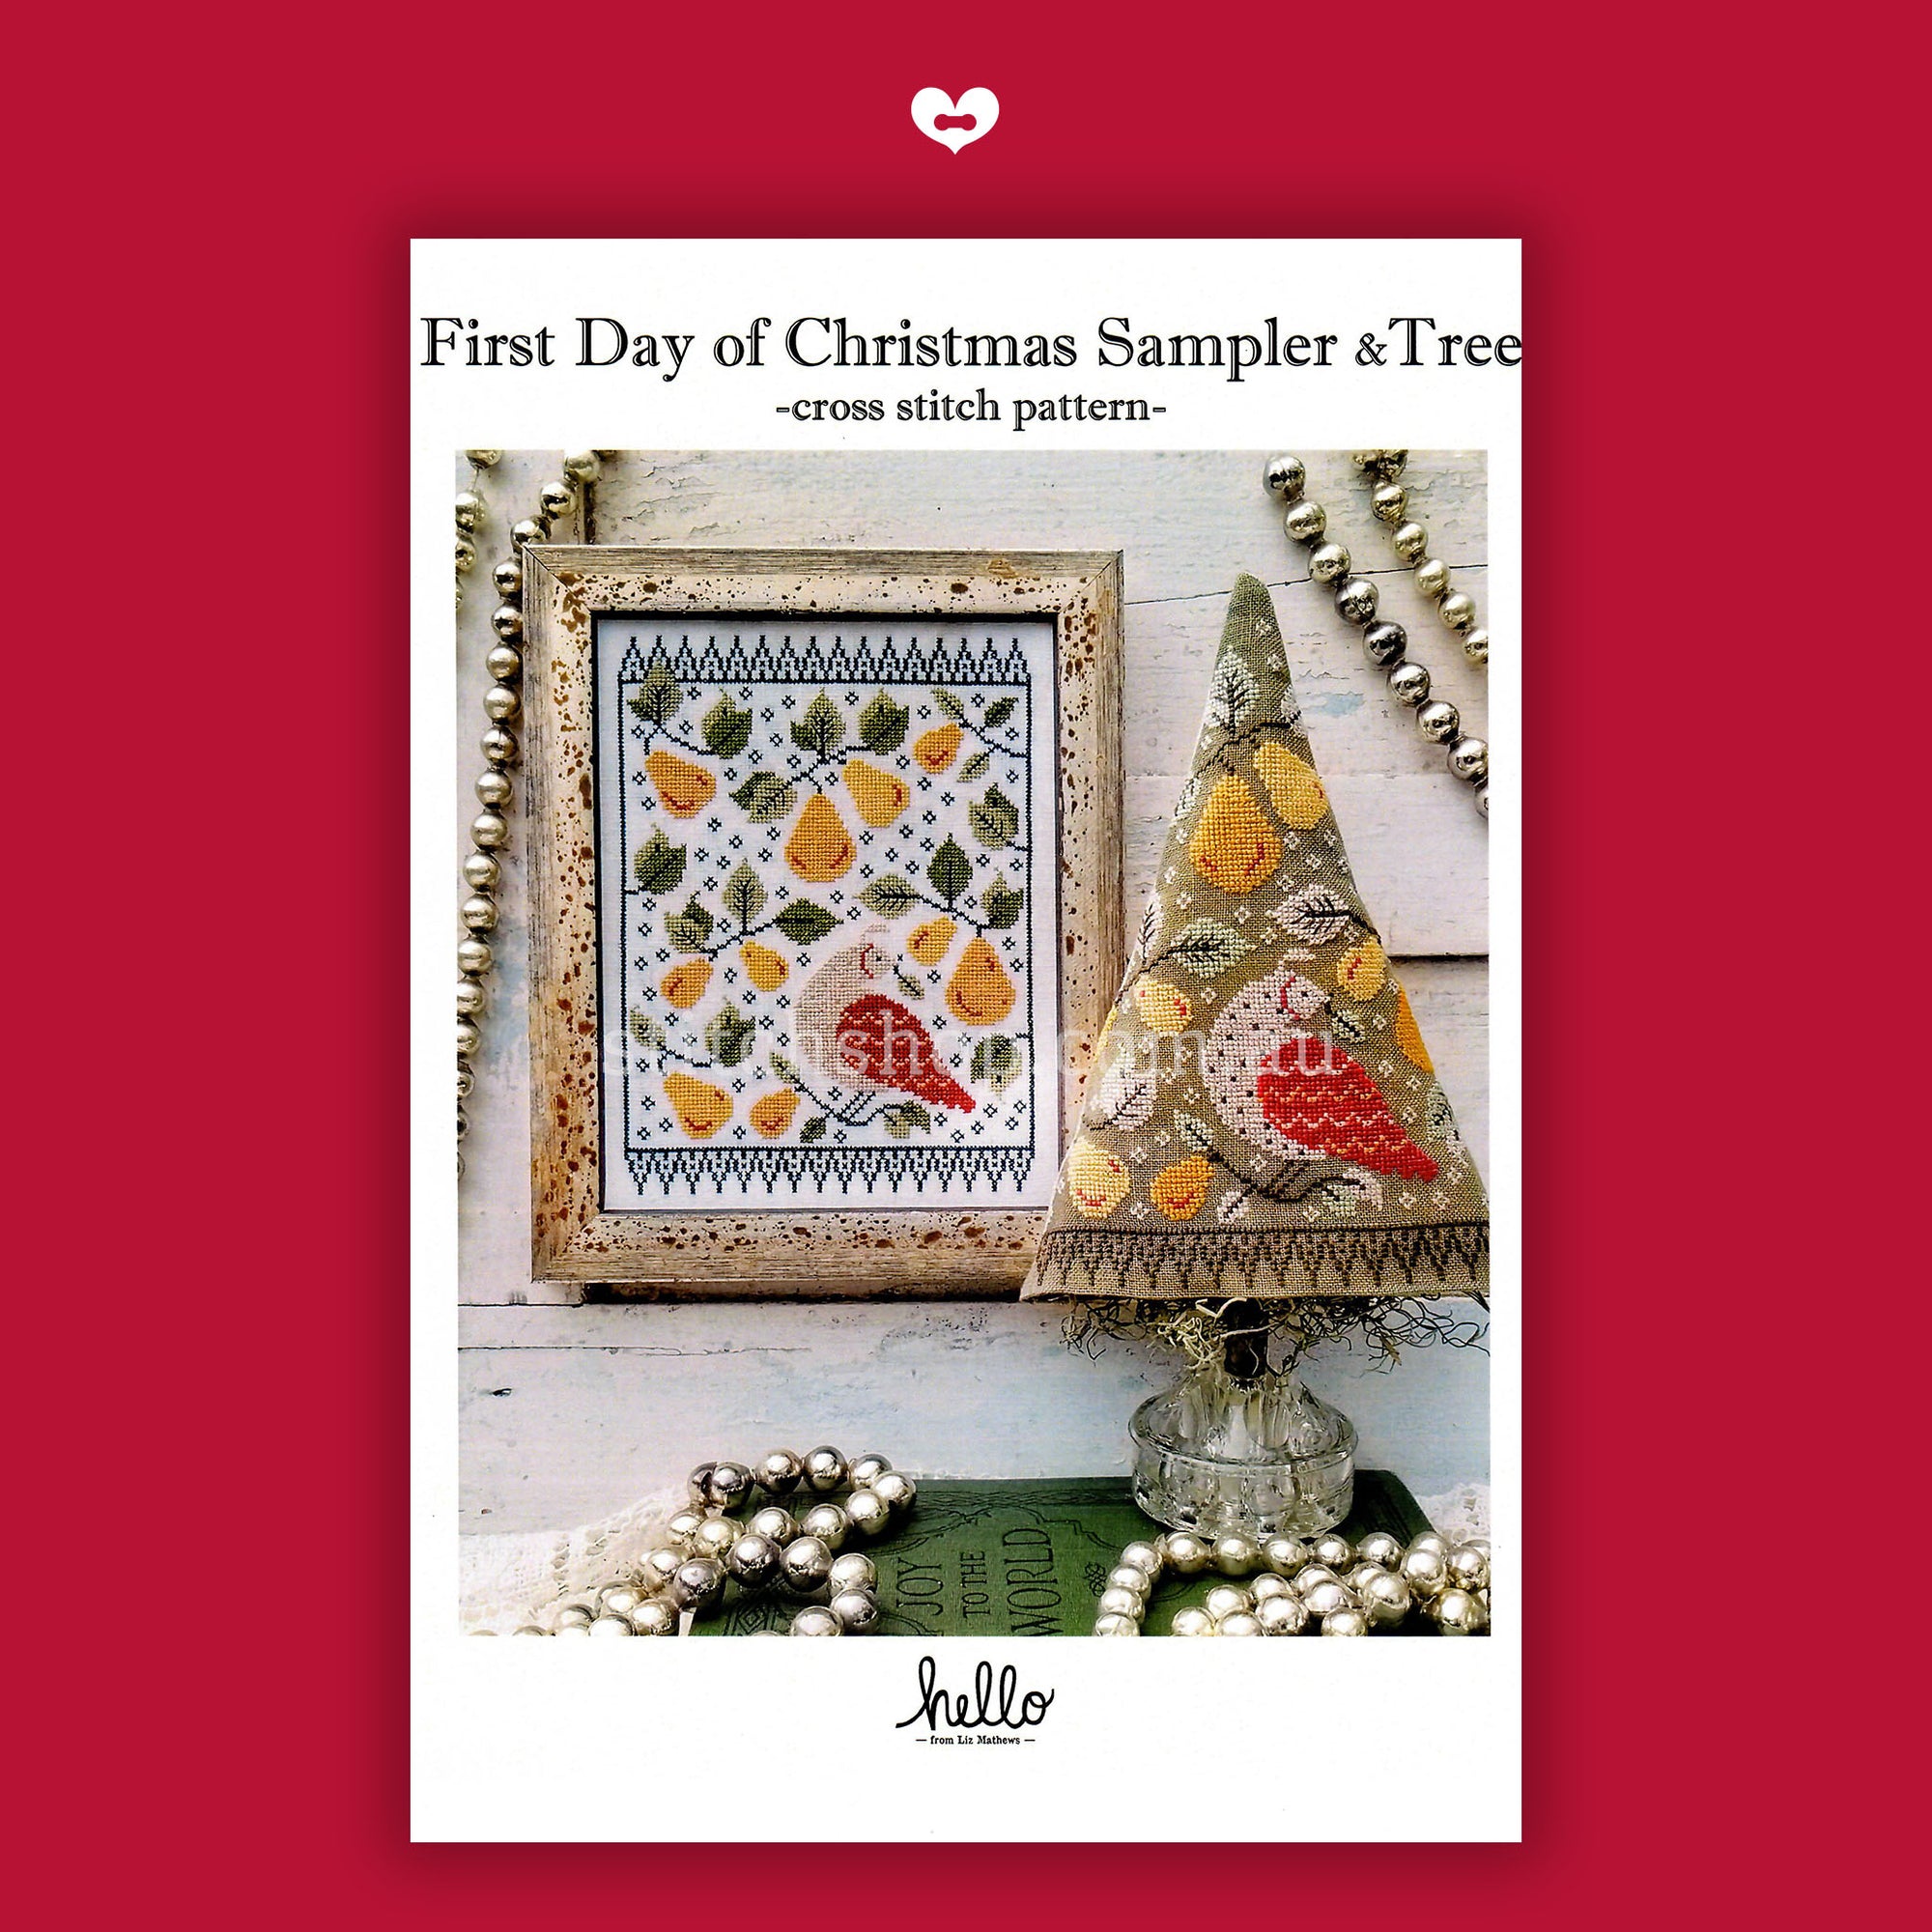 Fifth Day of Christmas Sampler & Tree